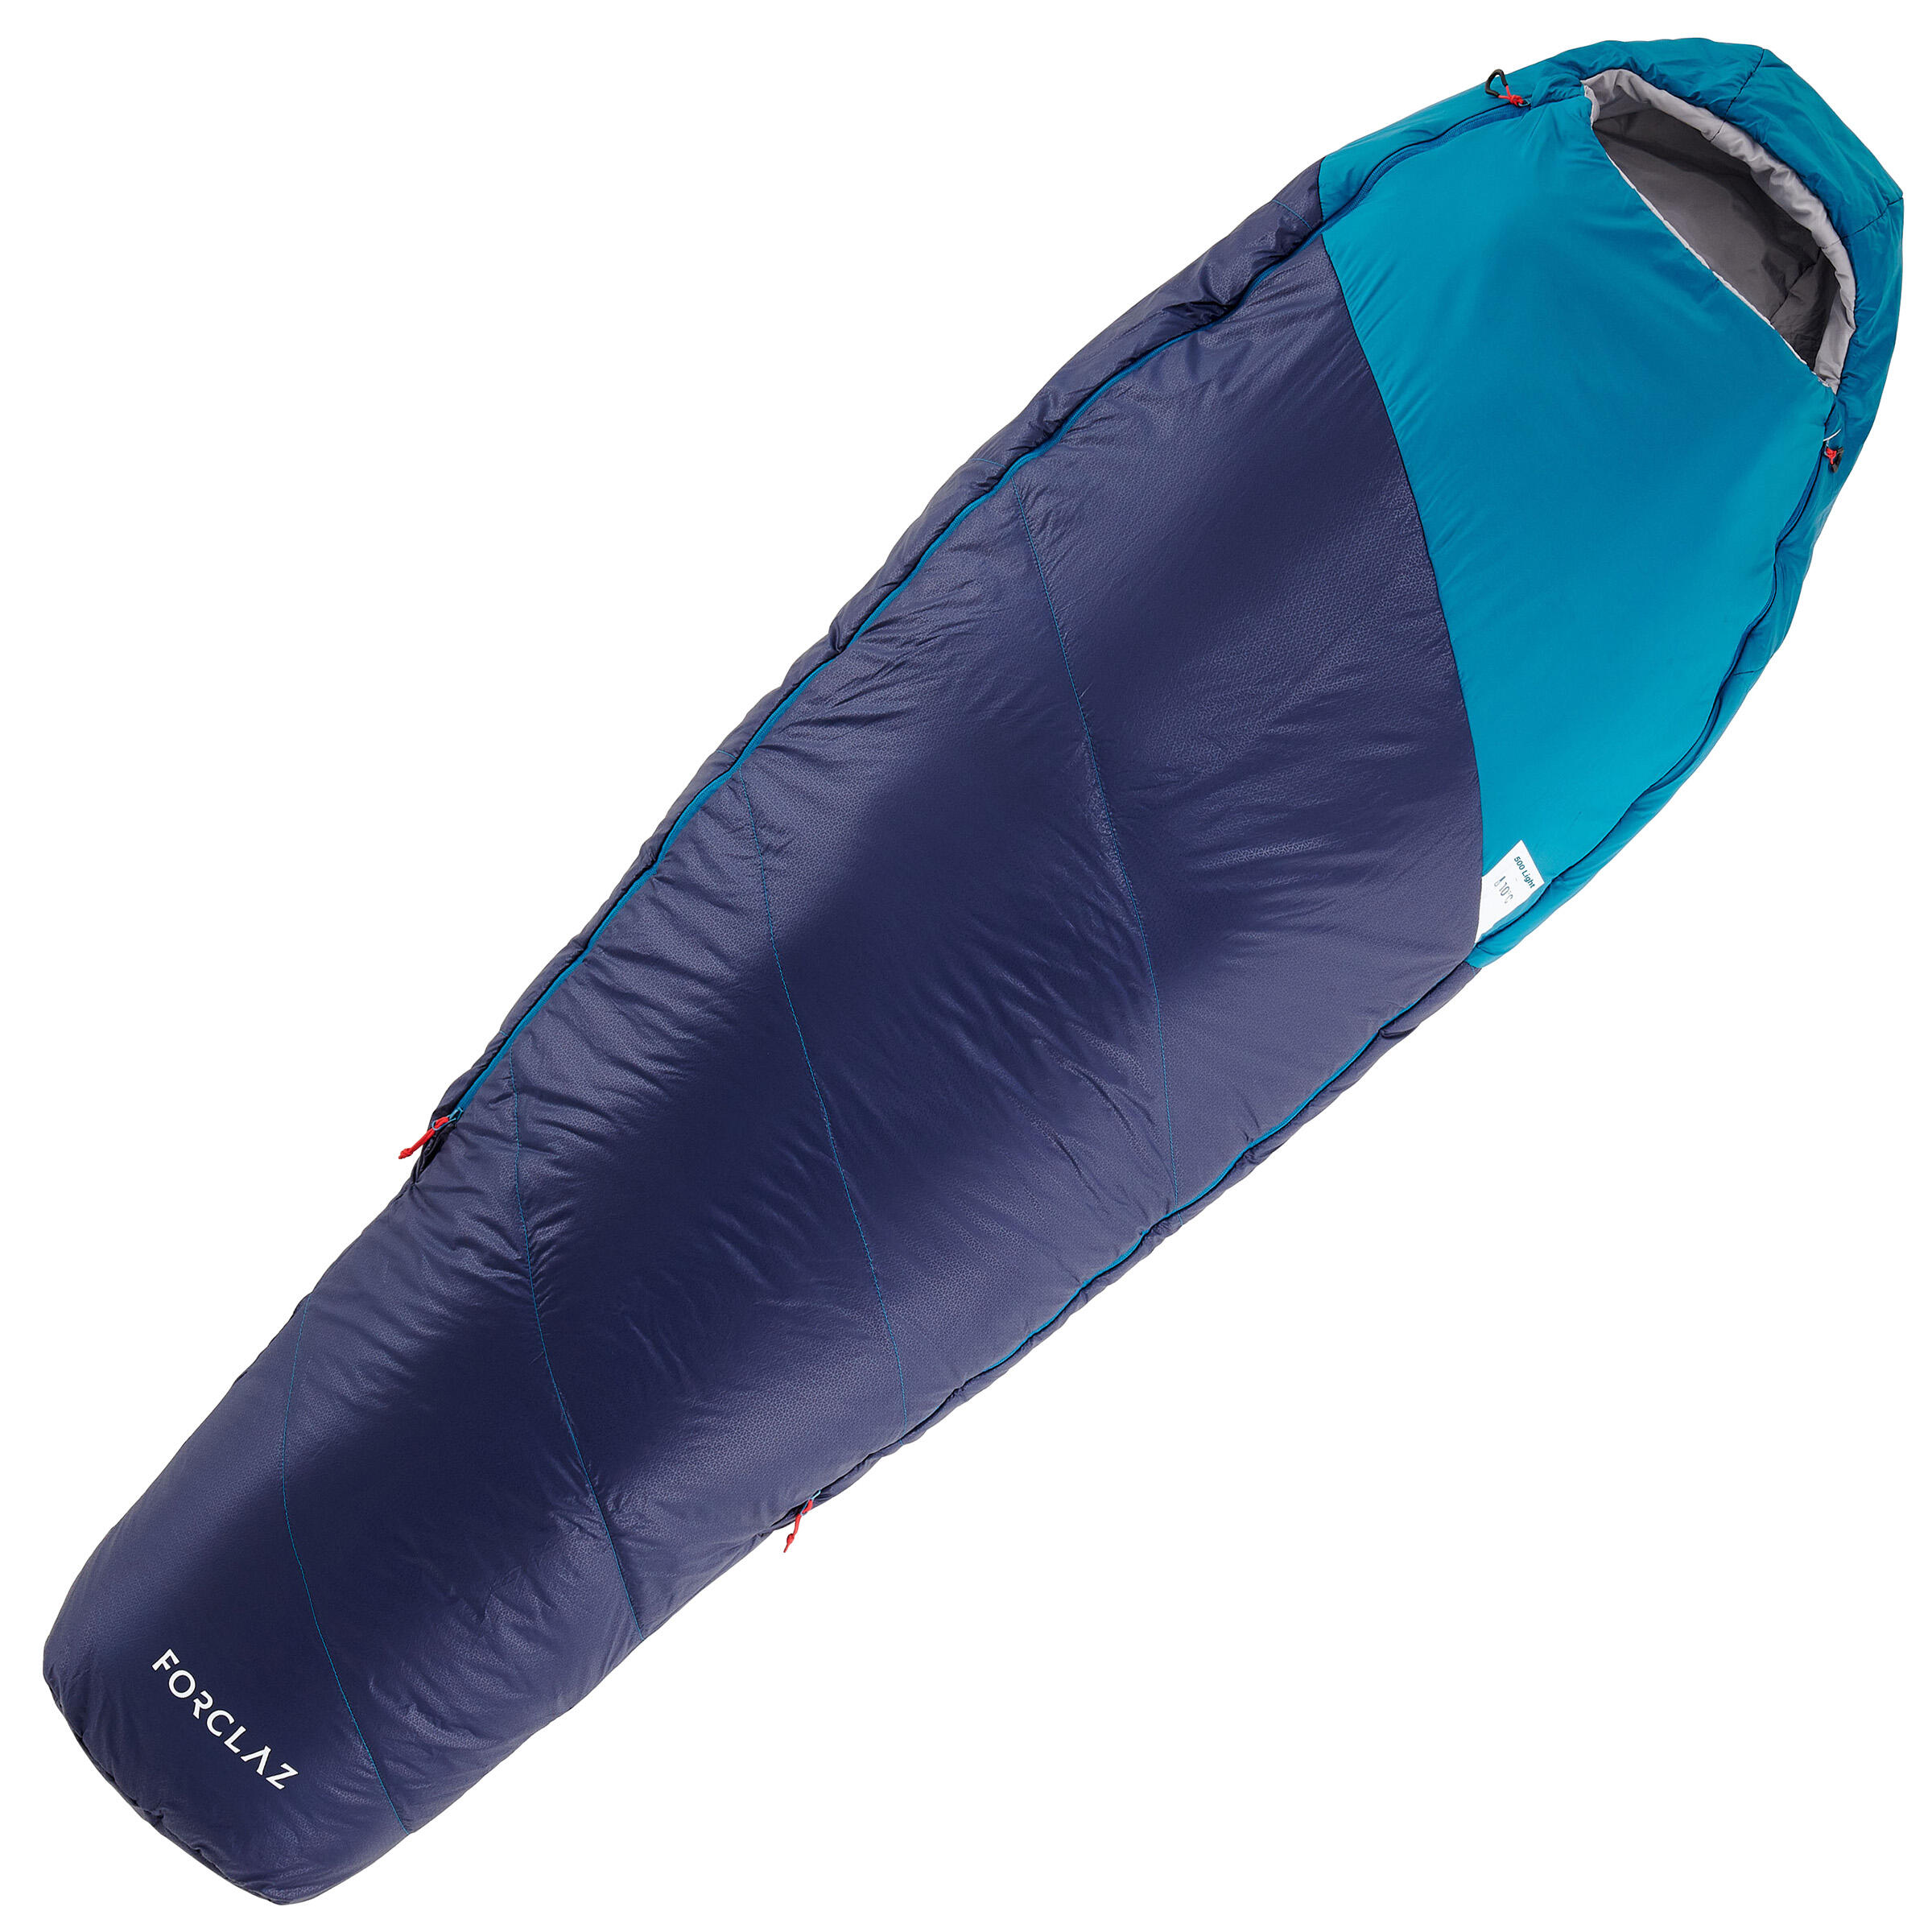 decathlon sleeping bag price